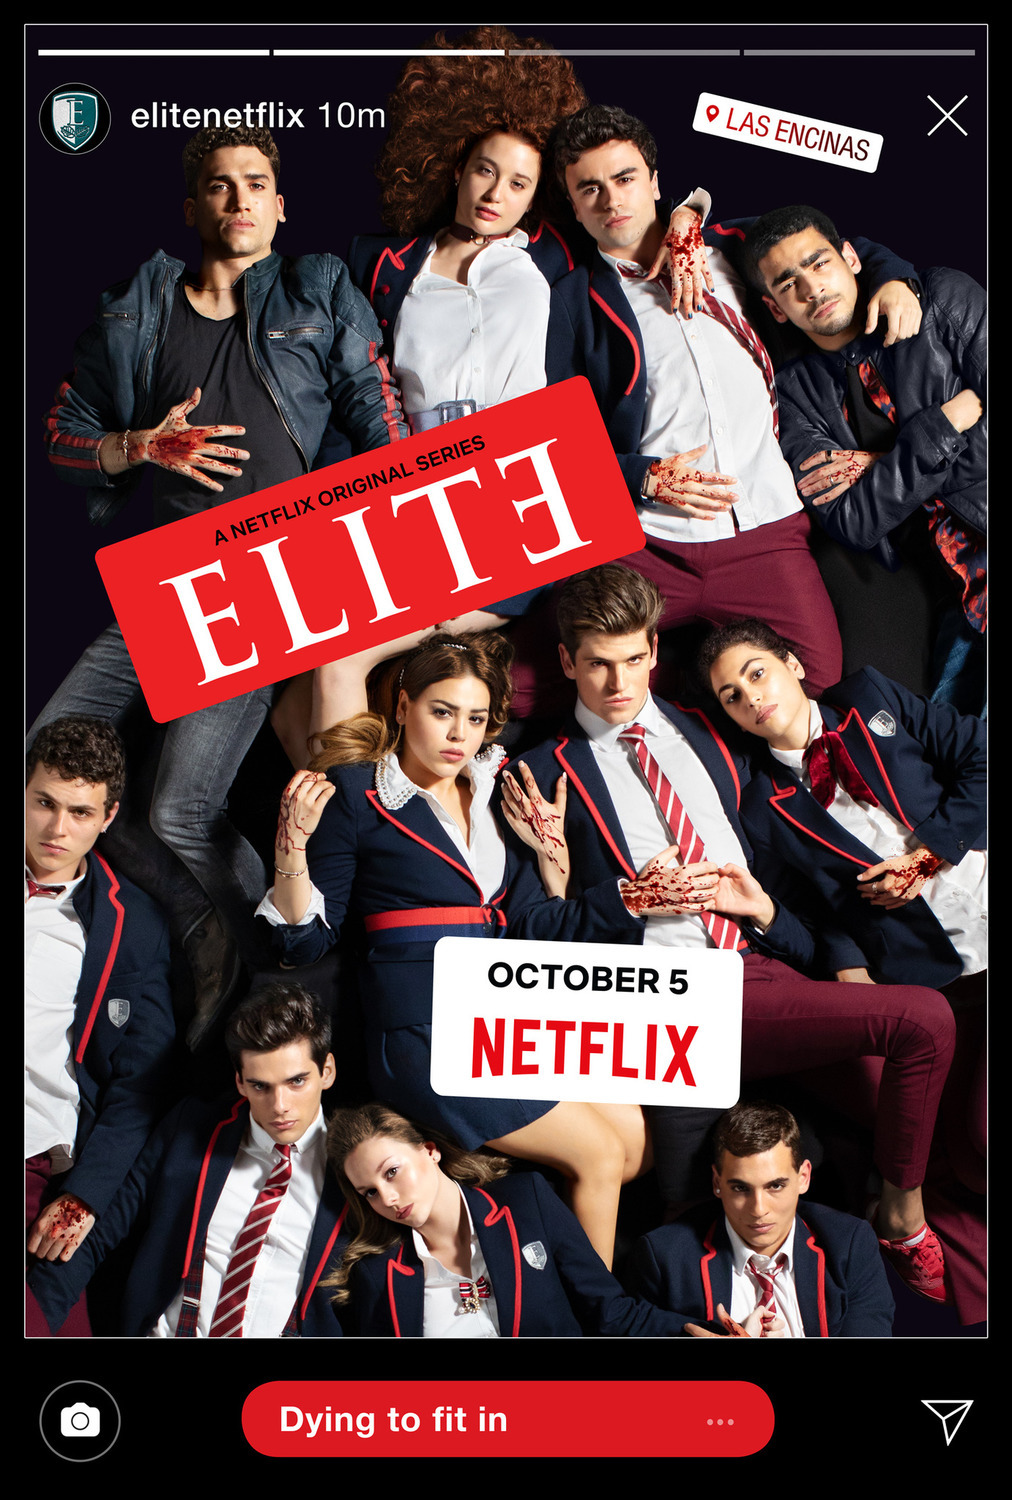 New on Netflix March 2020: “Elite” Season 3, New “On My Block”